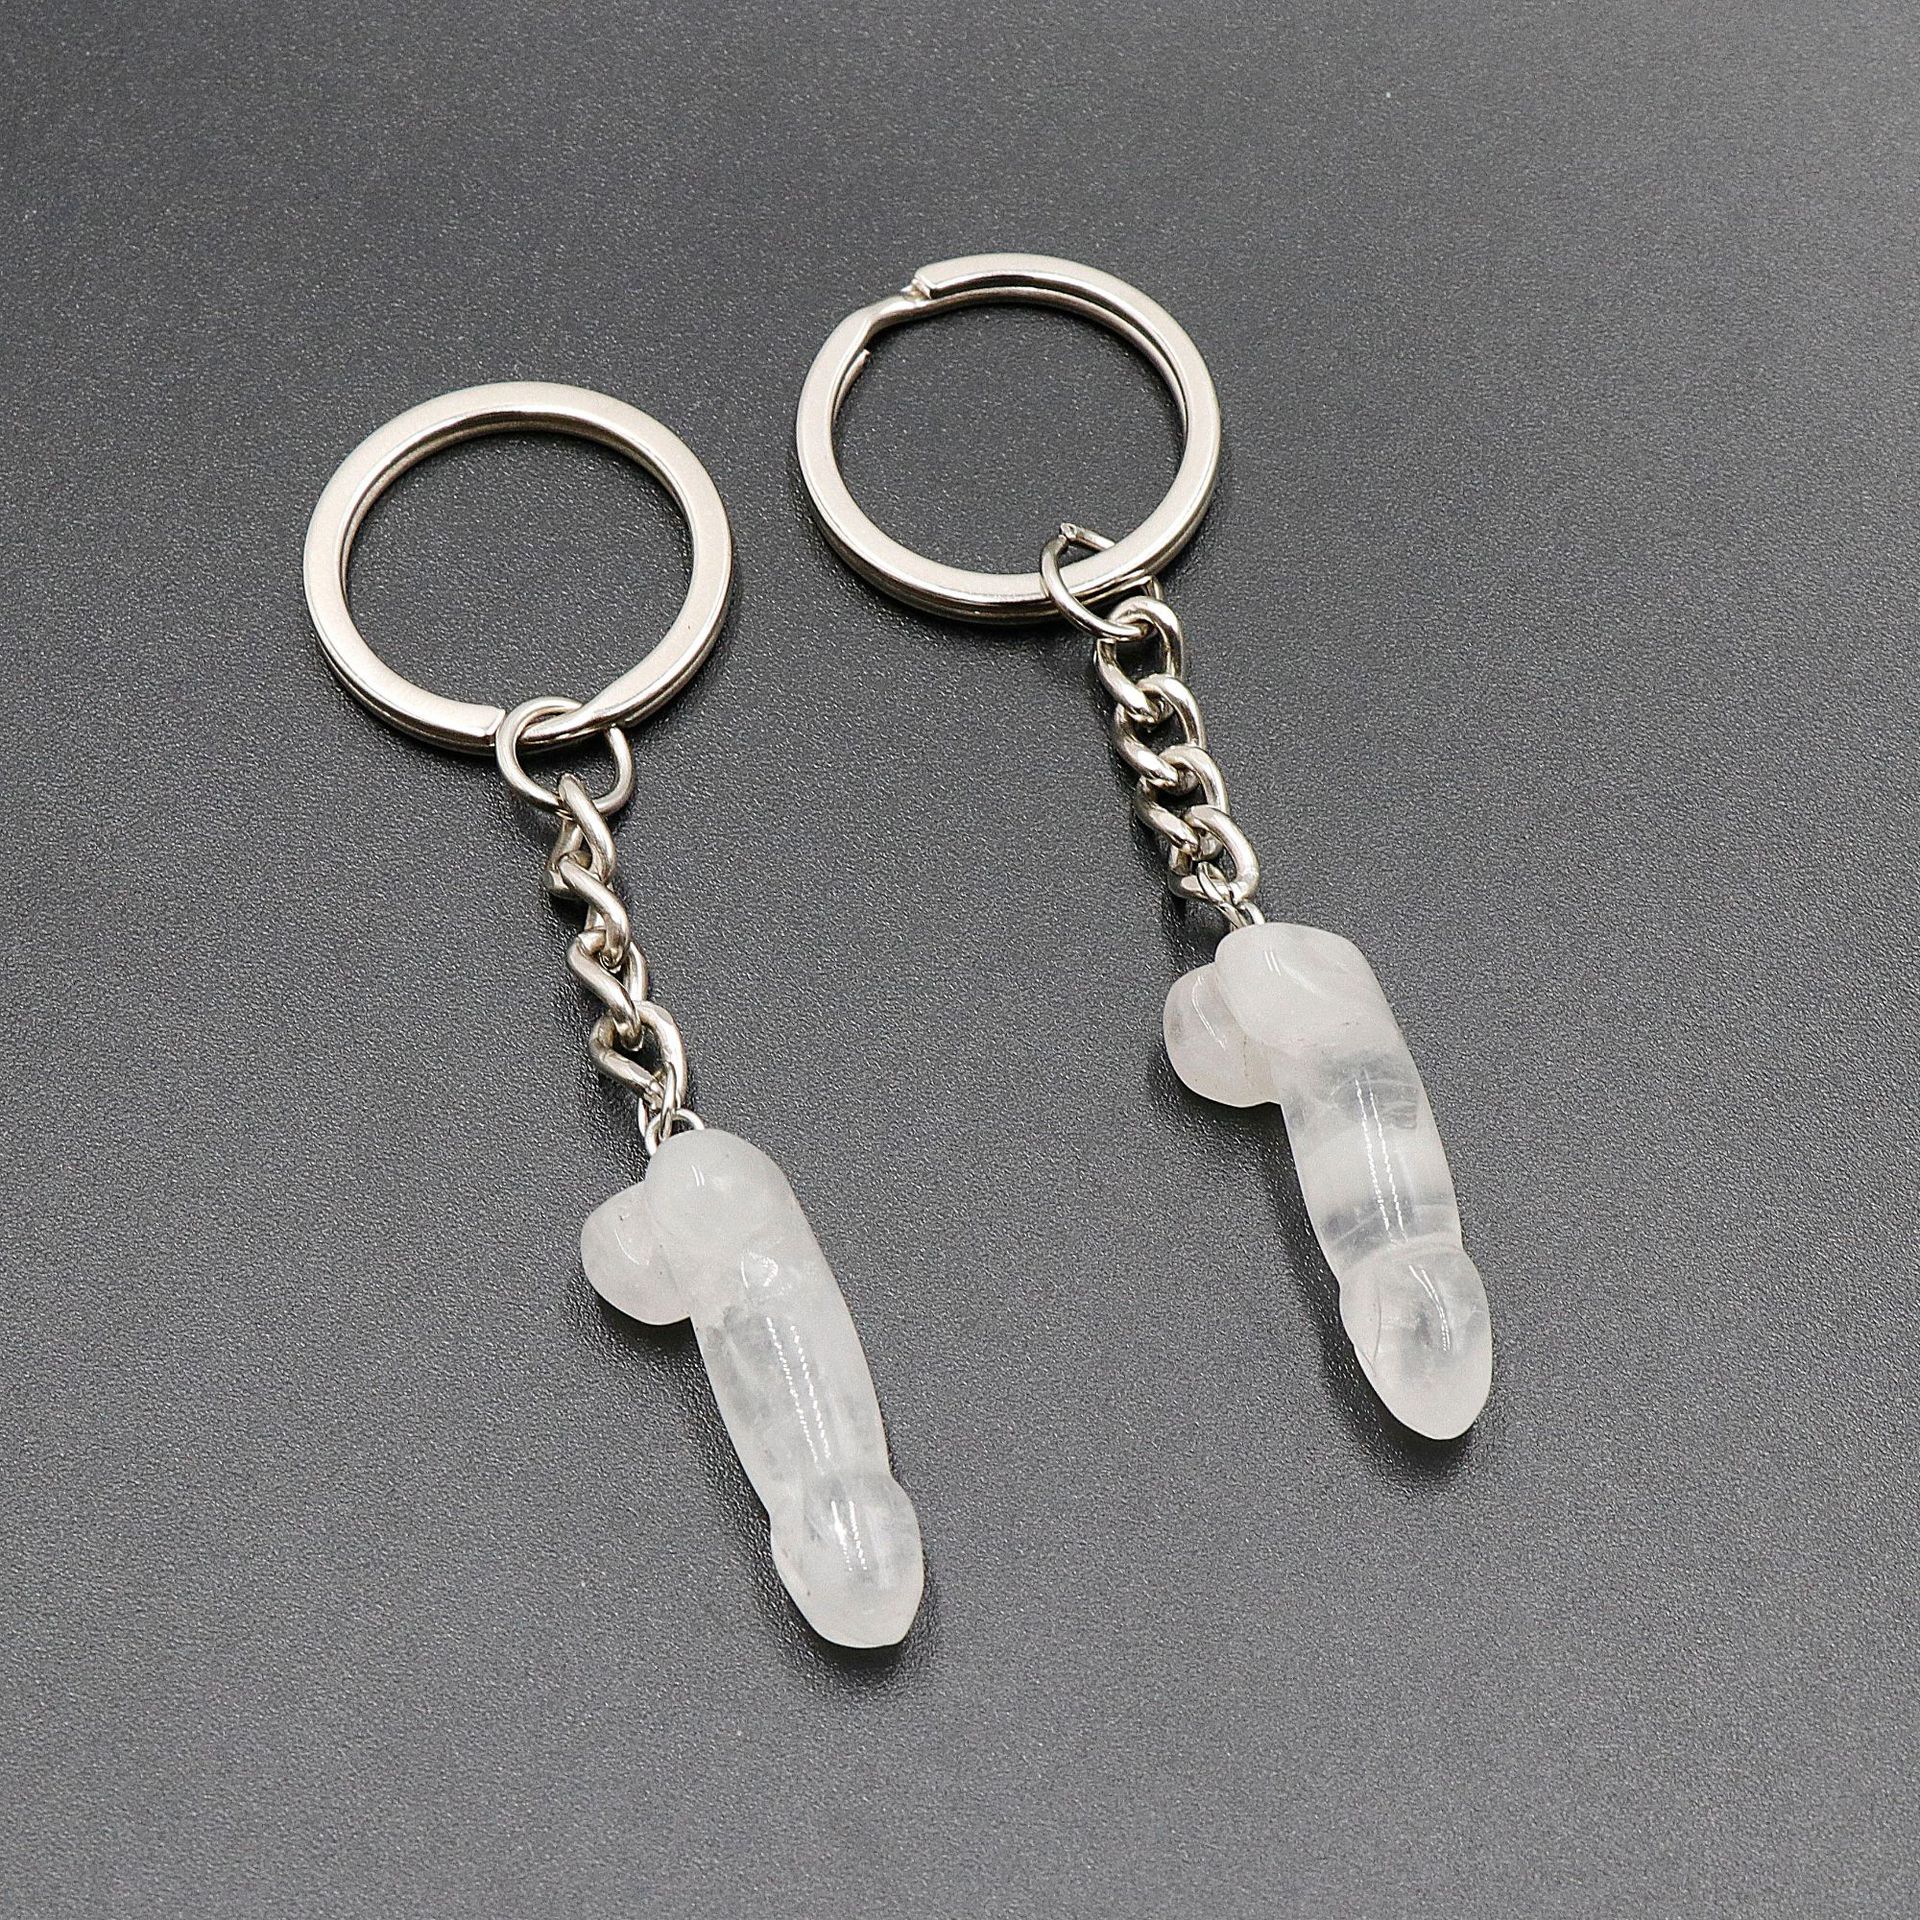 White crystal key chain